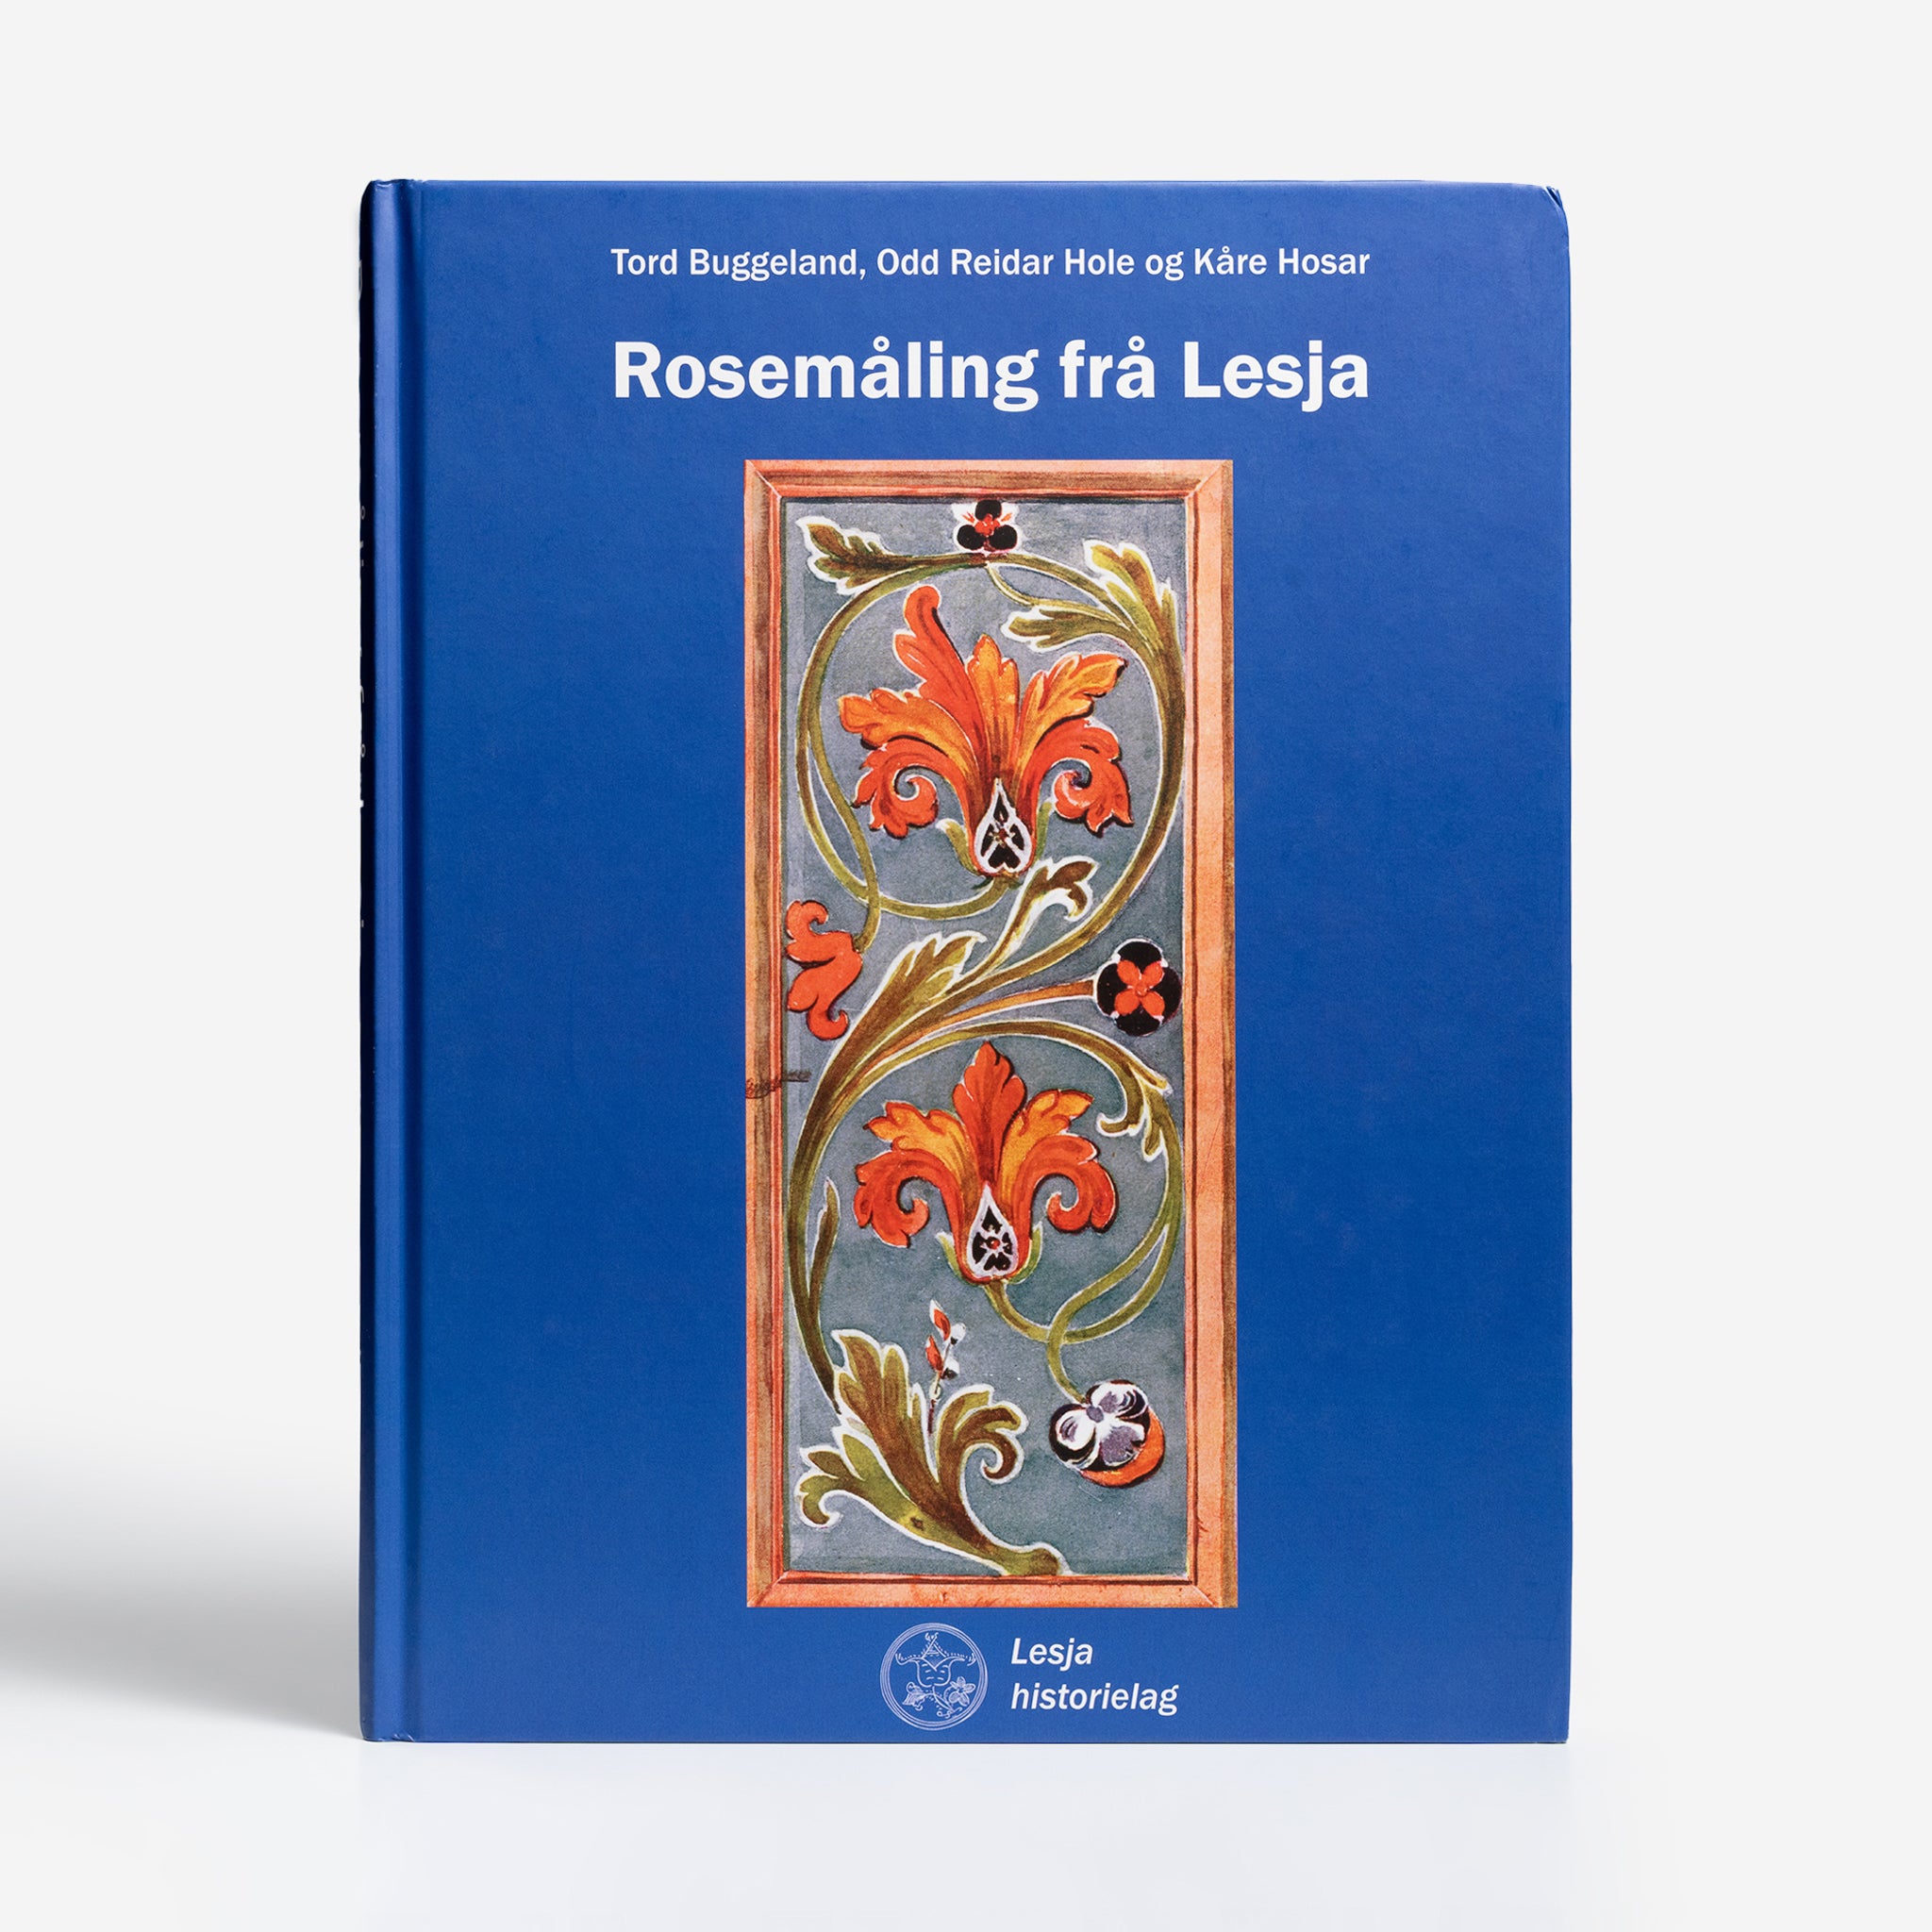 Rosemaling frå Lesja by Buggeland, Hole, and Hosar